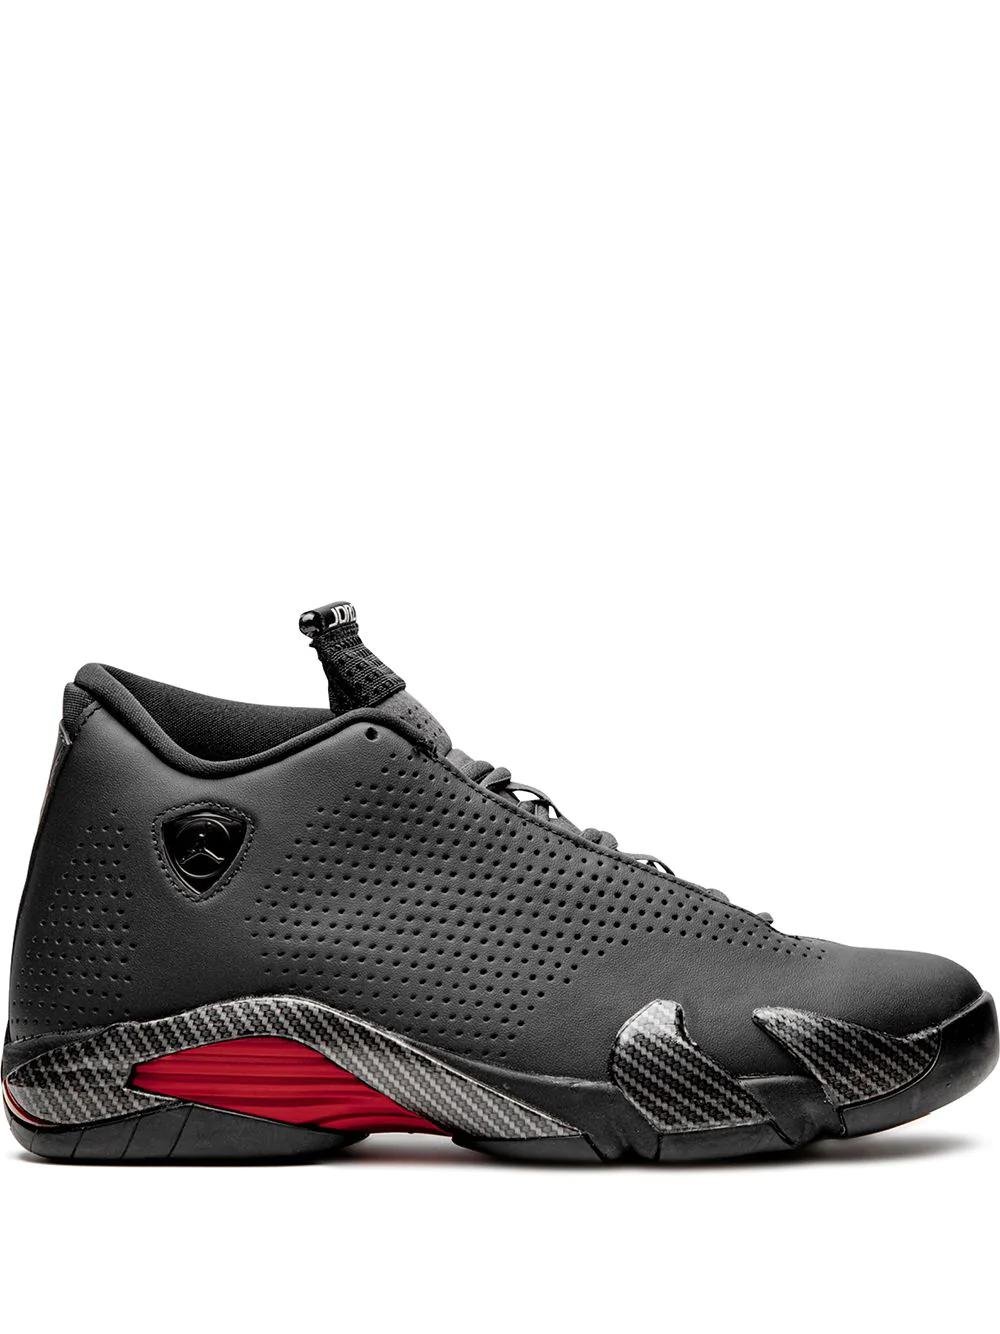 Air Jordan 14 "Black Ferrari" sneakers by JORDAN